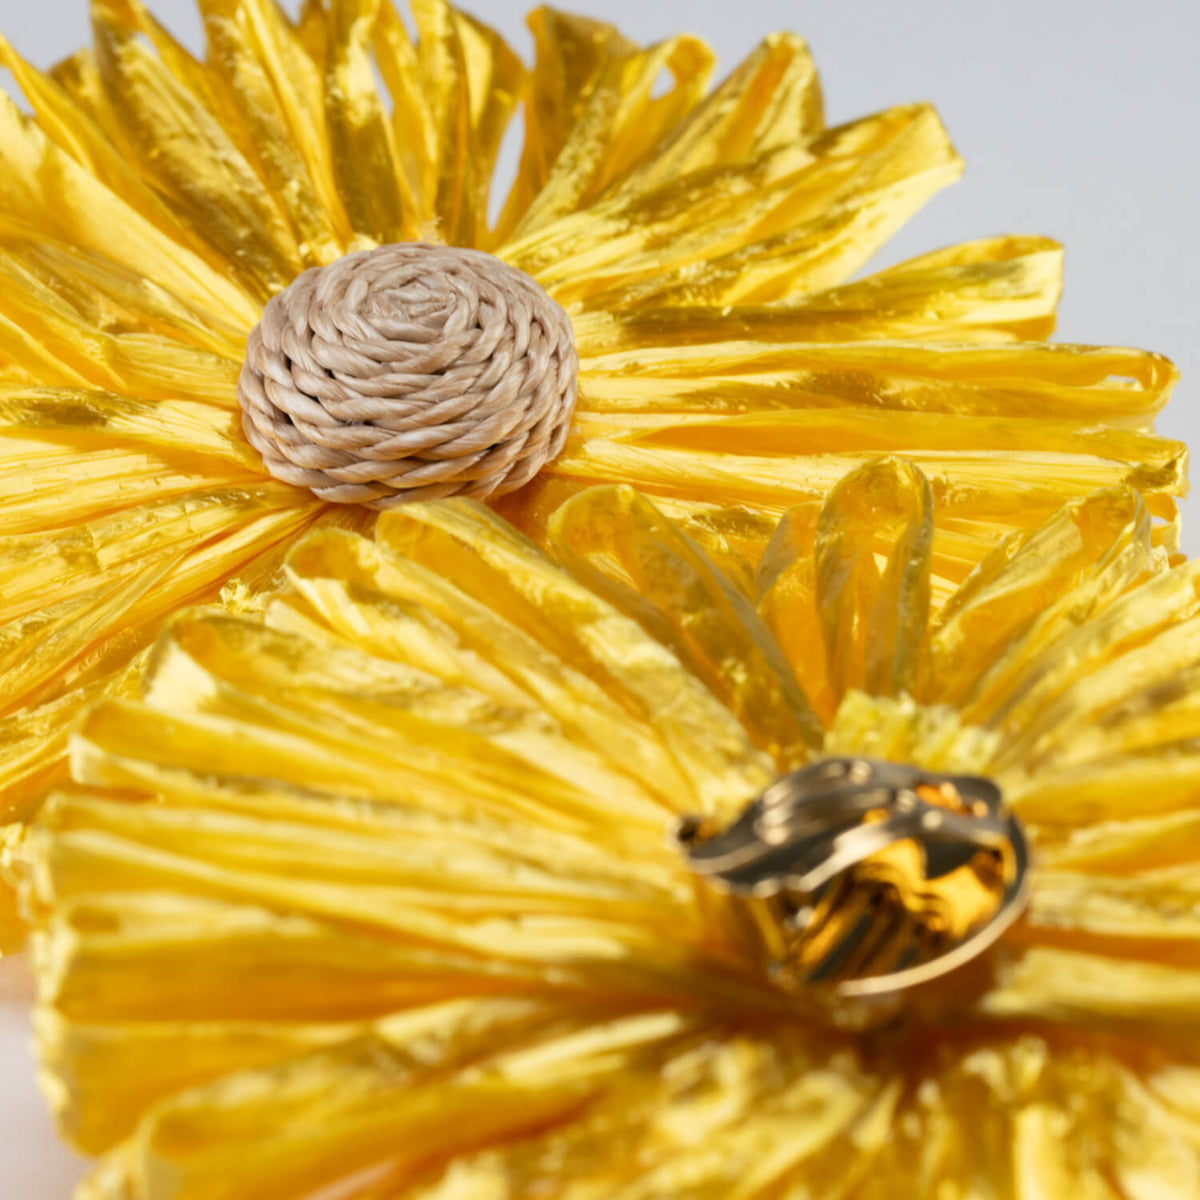 Sunflower Earring Yellow